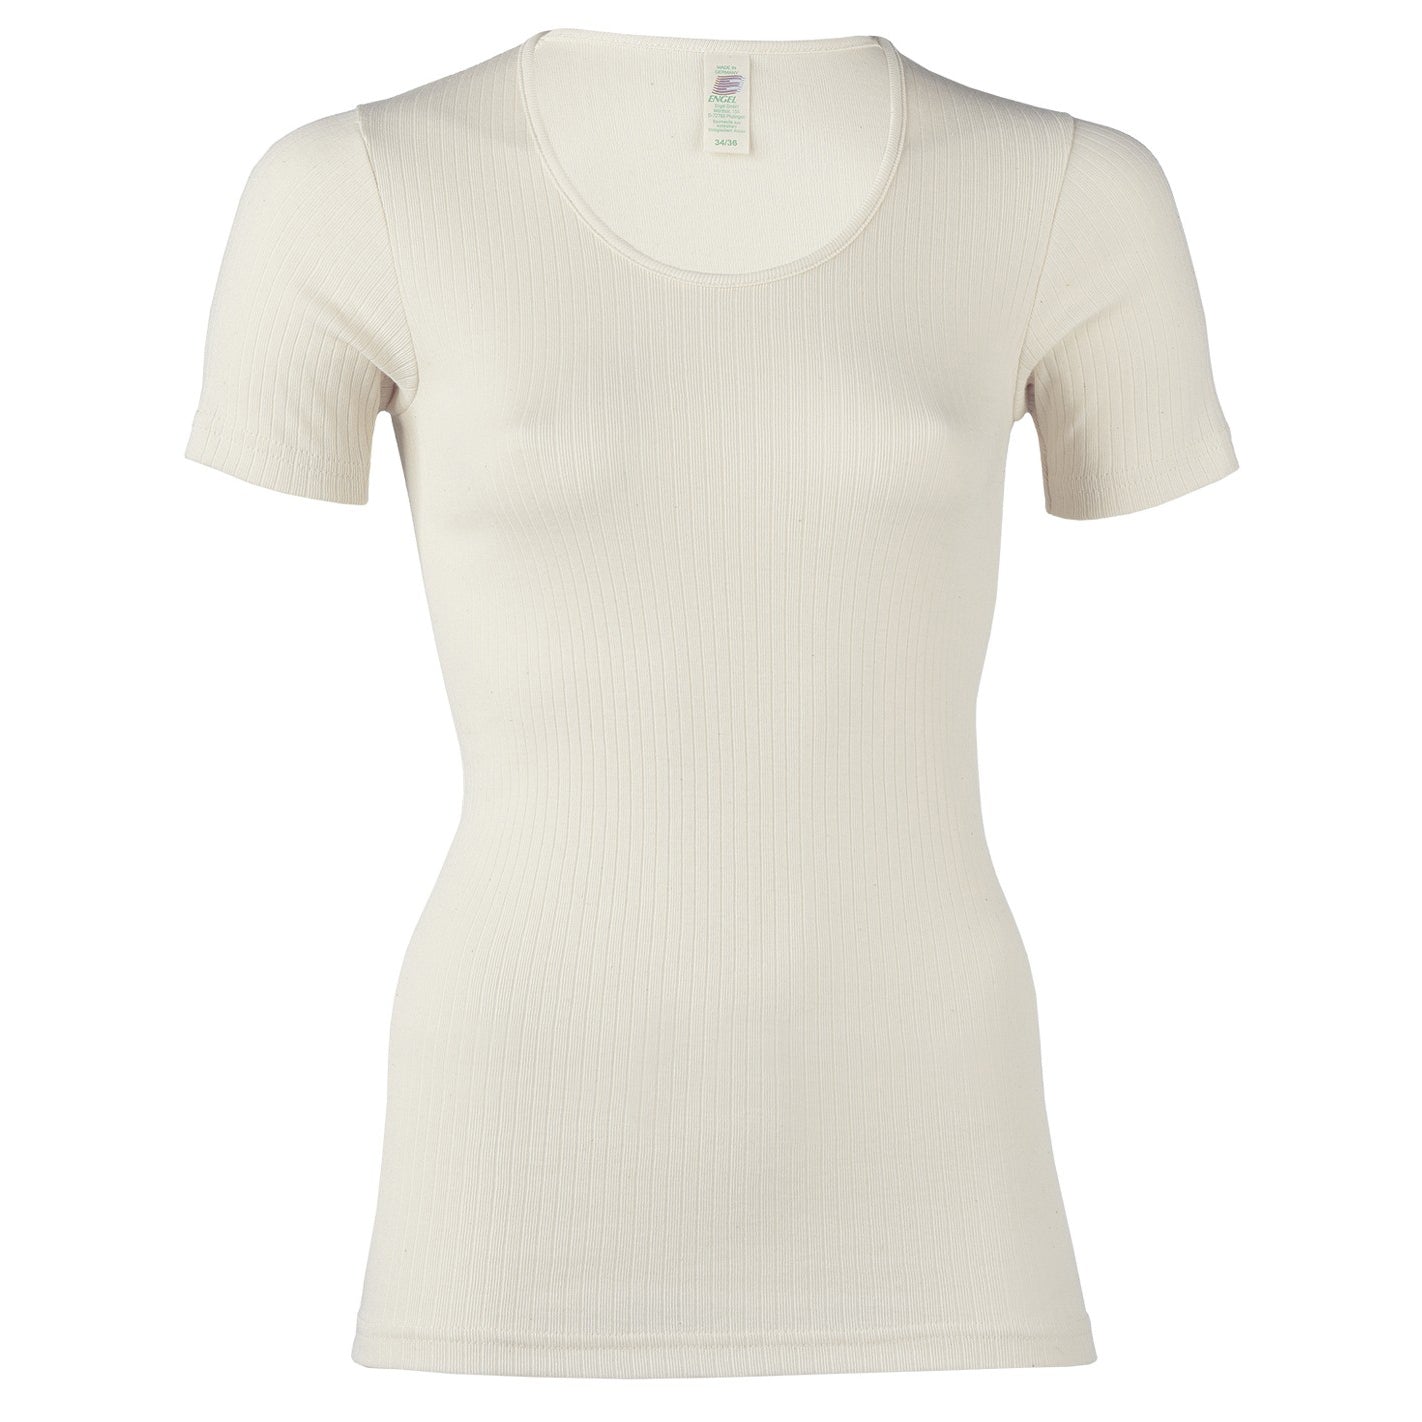 Engel organic cotton women's undershirt, sleeveless